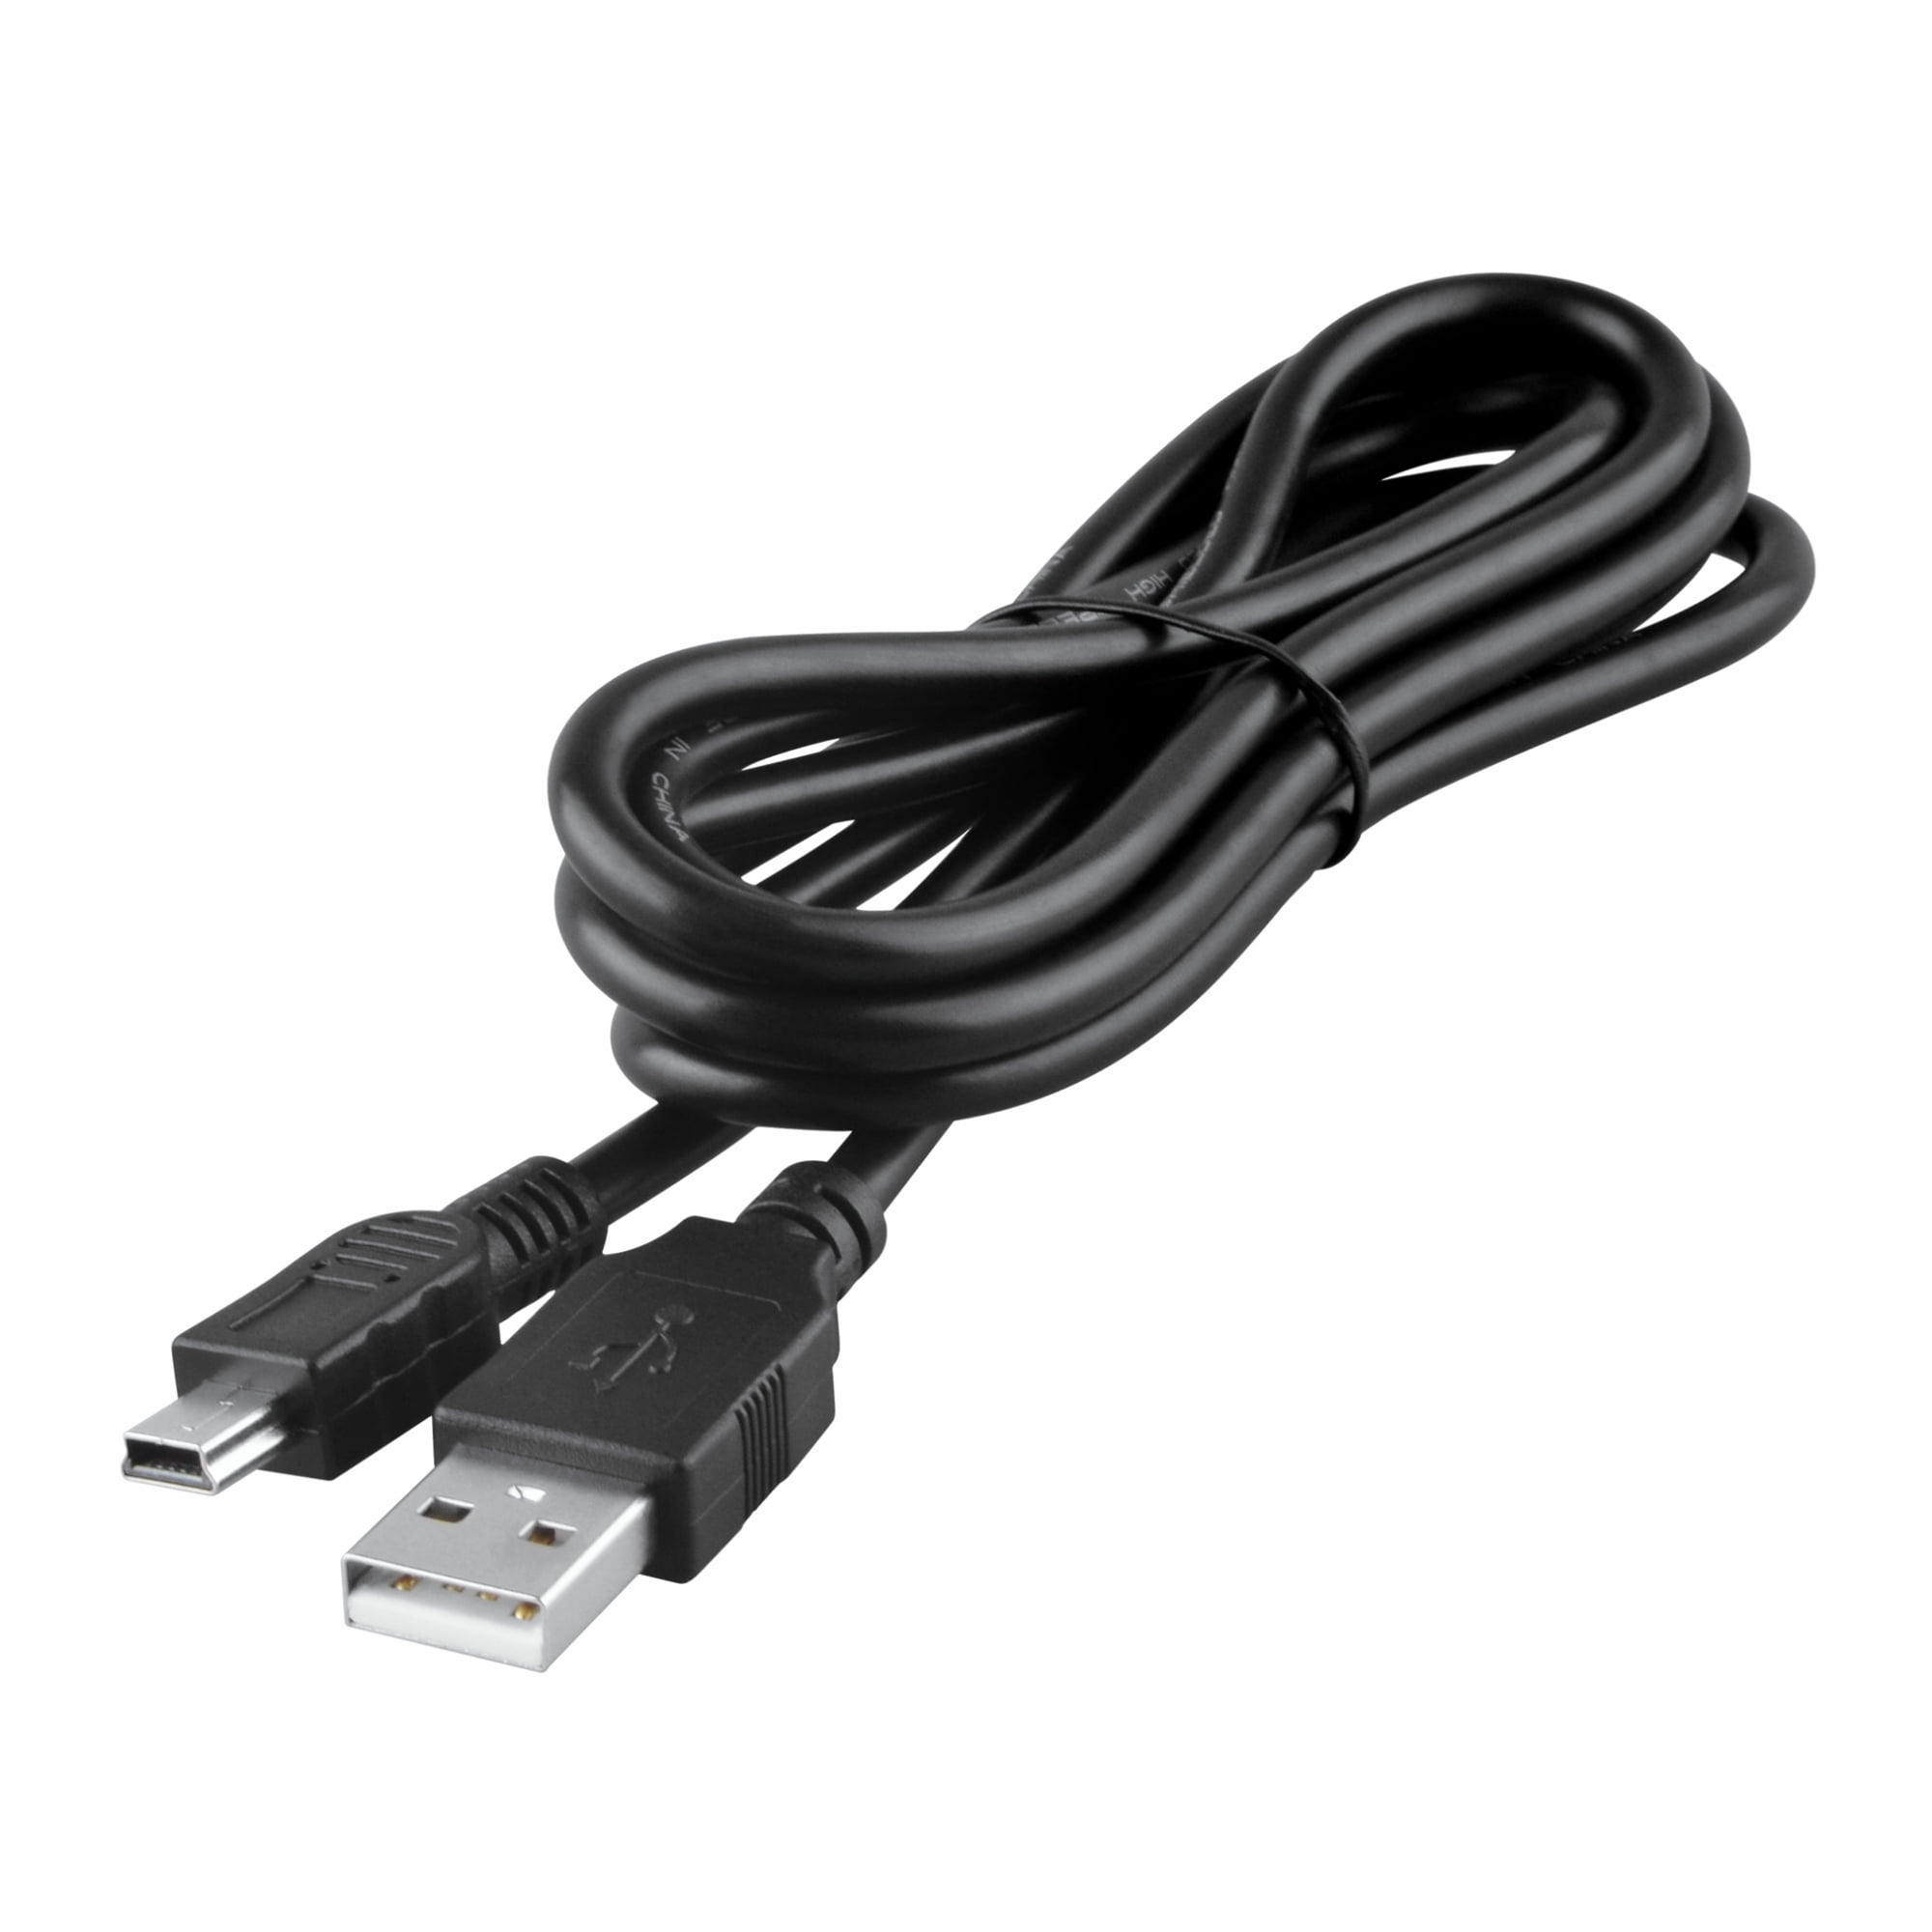 OLYMPUS  FE-100,FE-110 CAMERA USB DATA CABLE LEAD/PC/MAC 